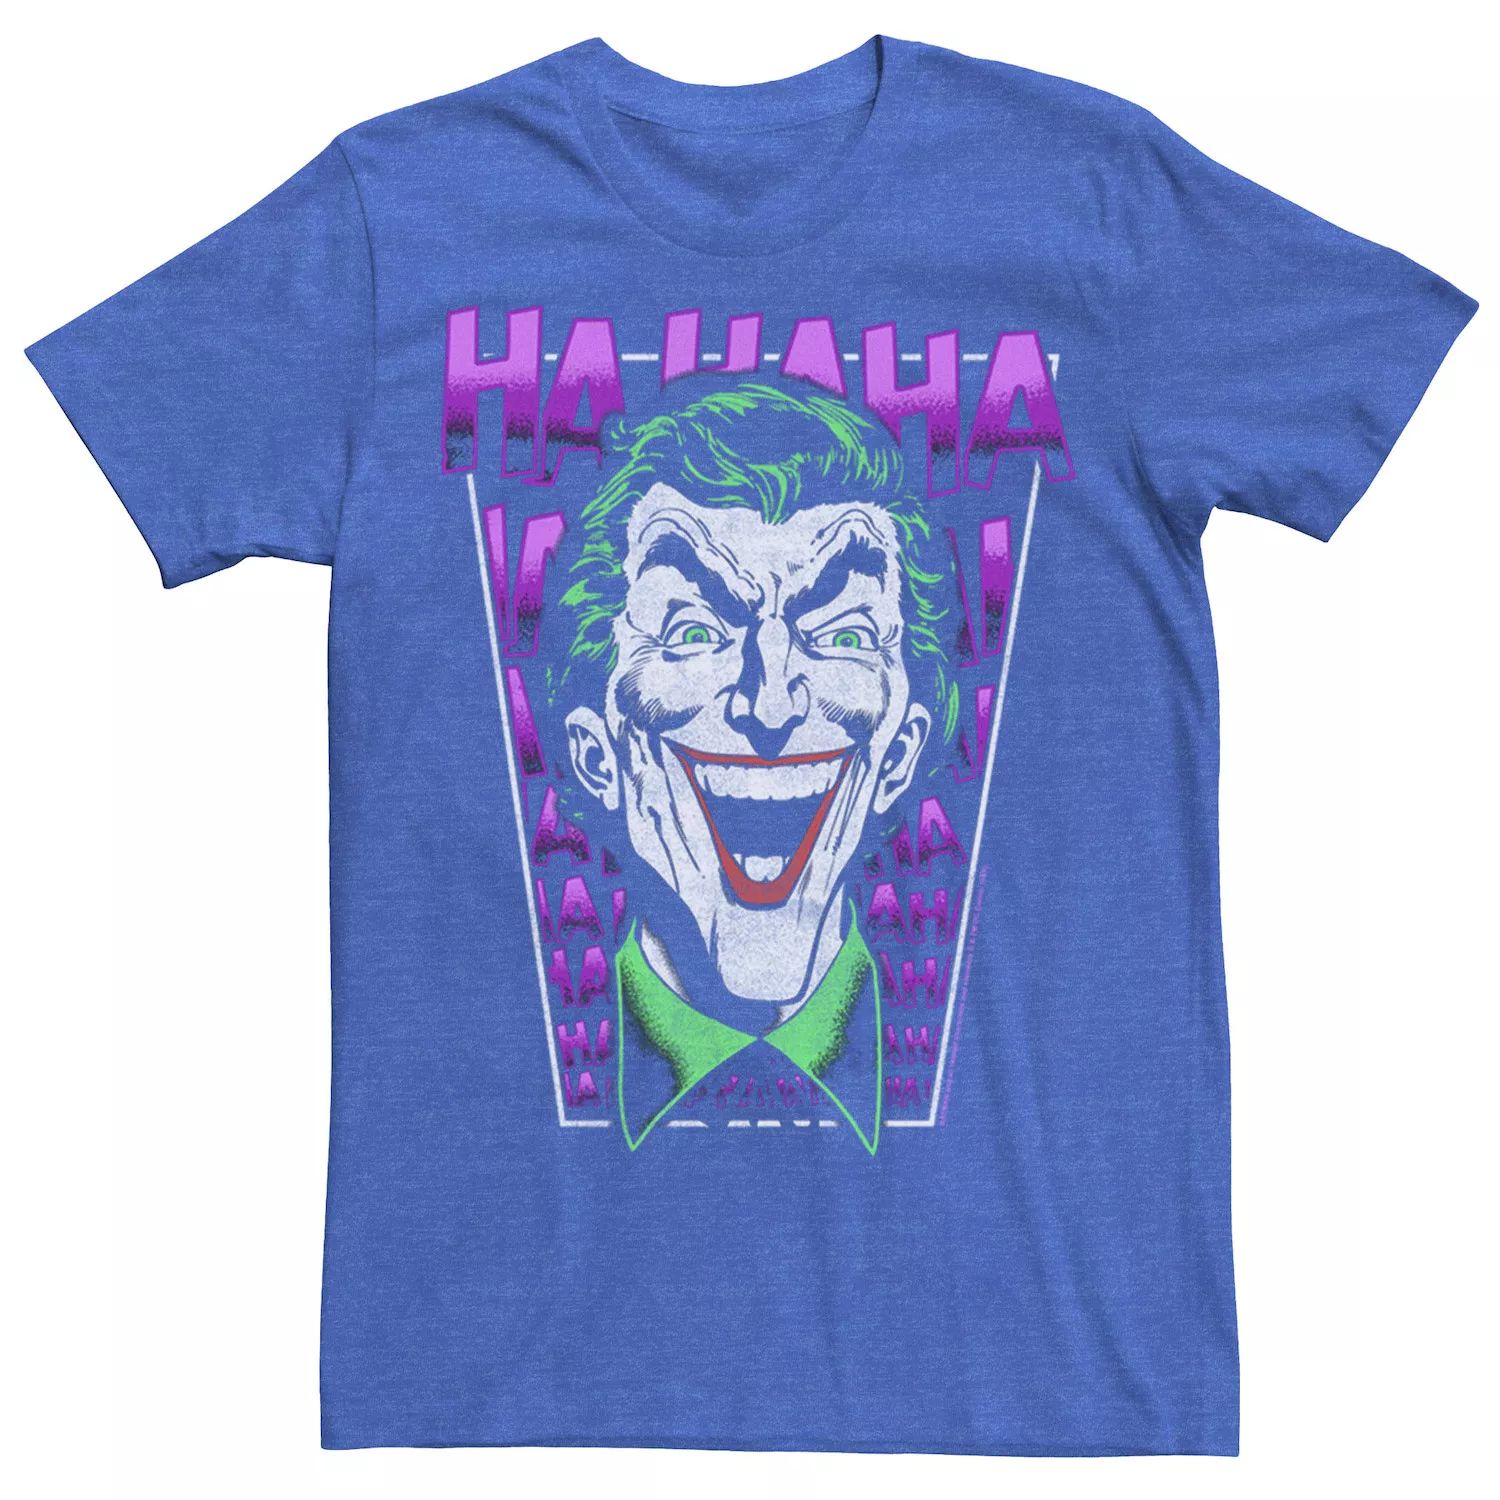 Мужская футболка The Joker HAHAHA с большим лицом DC Comics зонт the joker hahaha